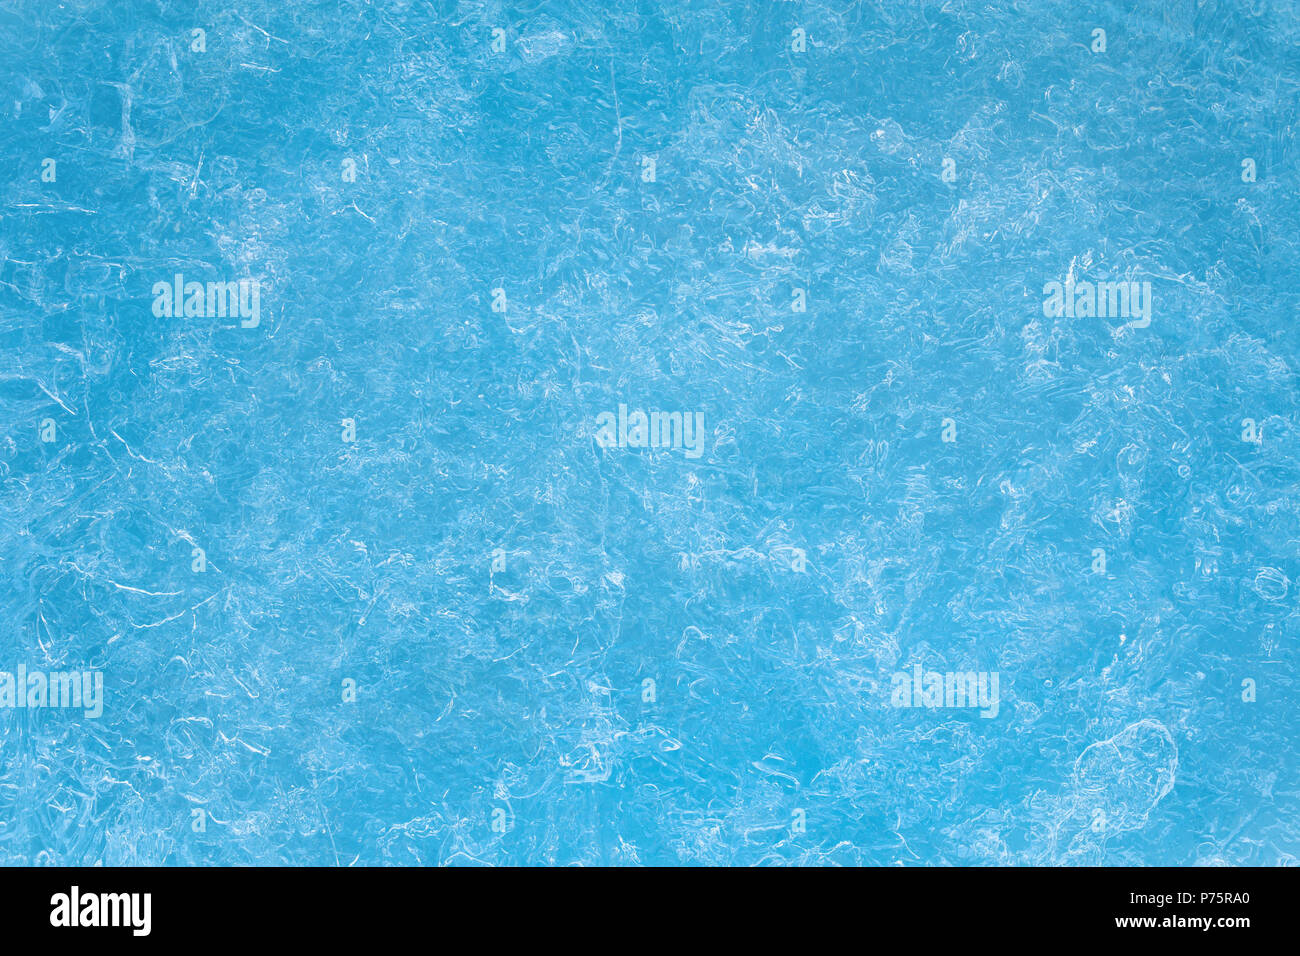 Summer blue ice texture background Stock Photo